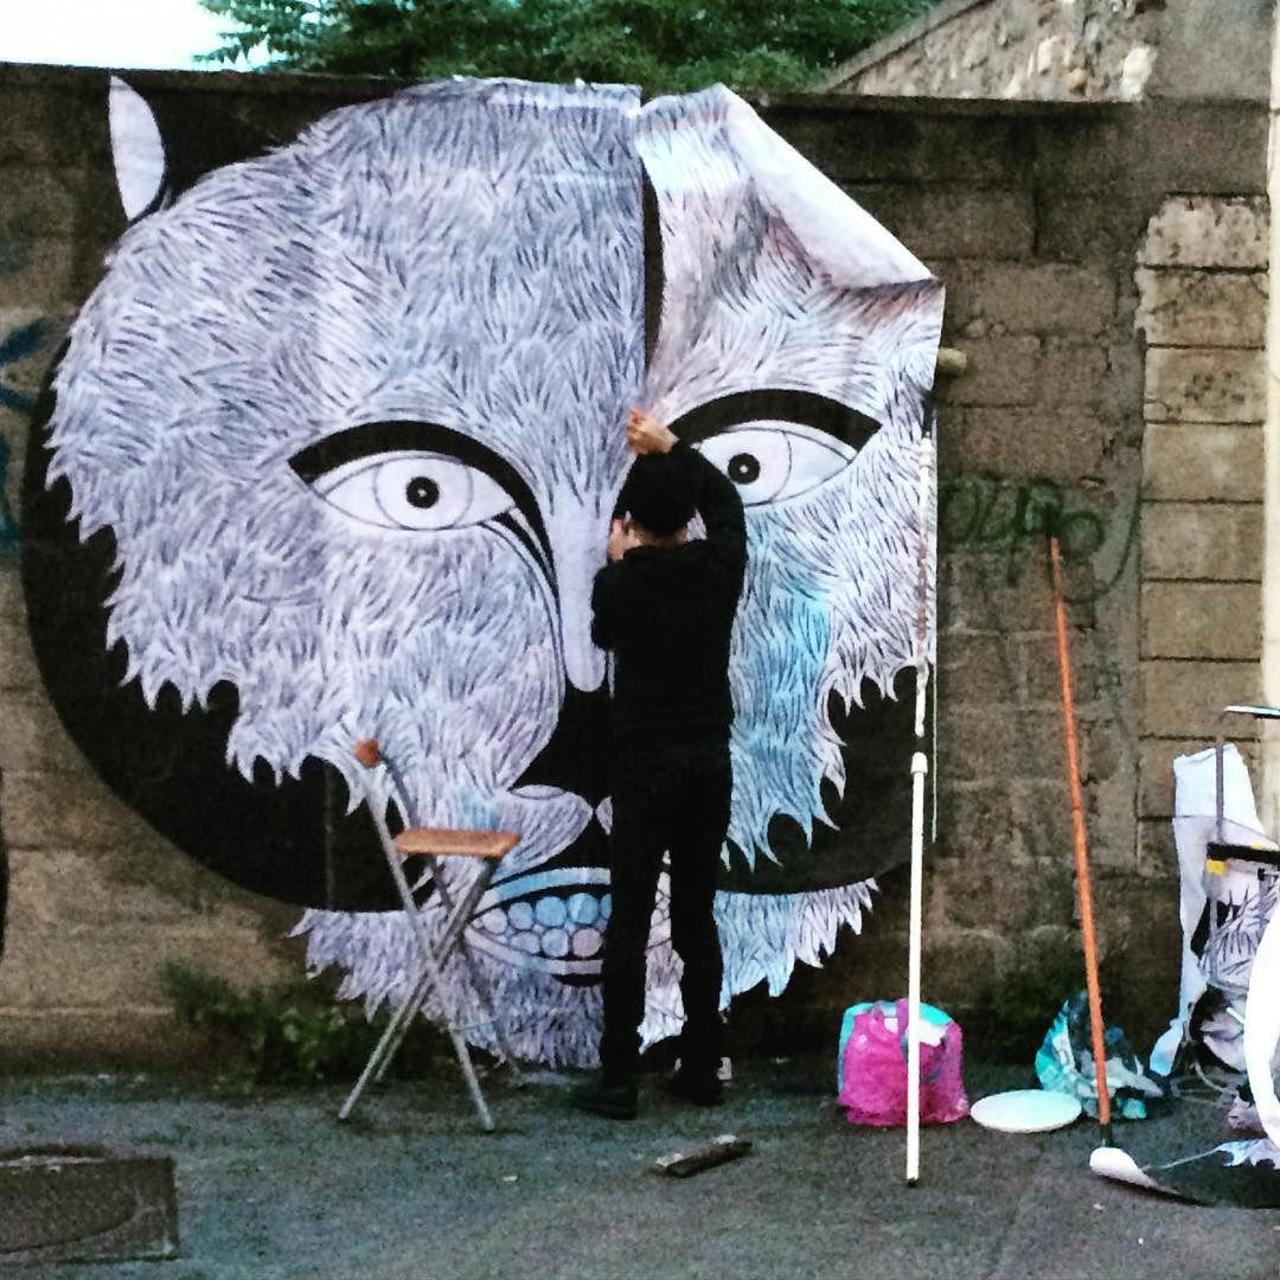 RT @circumjacent_fr: #Paris #graffiti photo by @elricoelmagnifico http://ift.tt/1LHVDEn #StreetArt http://t.co/PzgrliPjfh